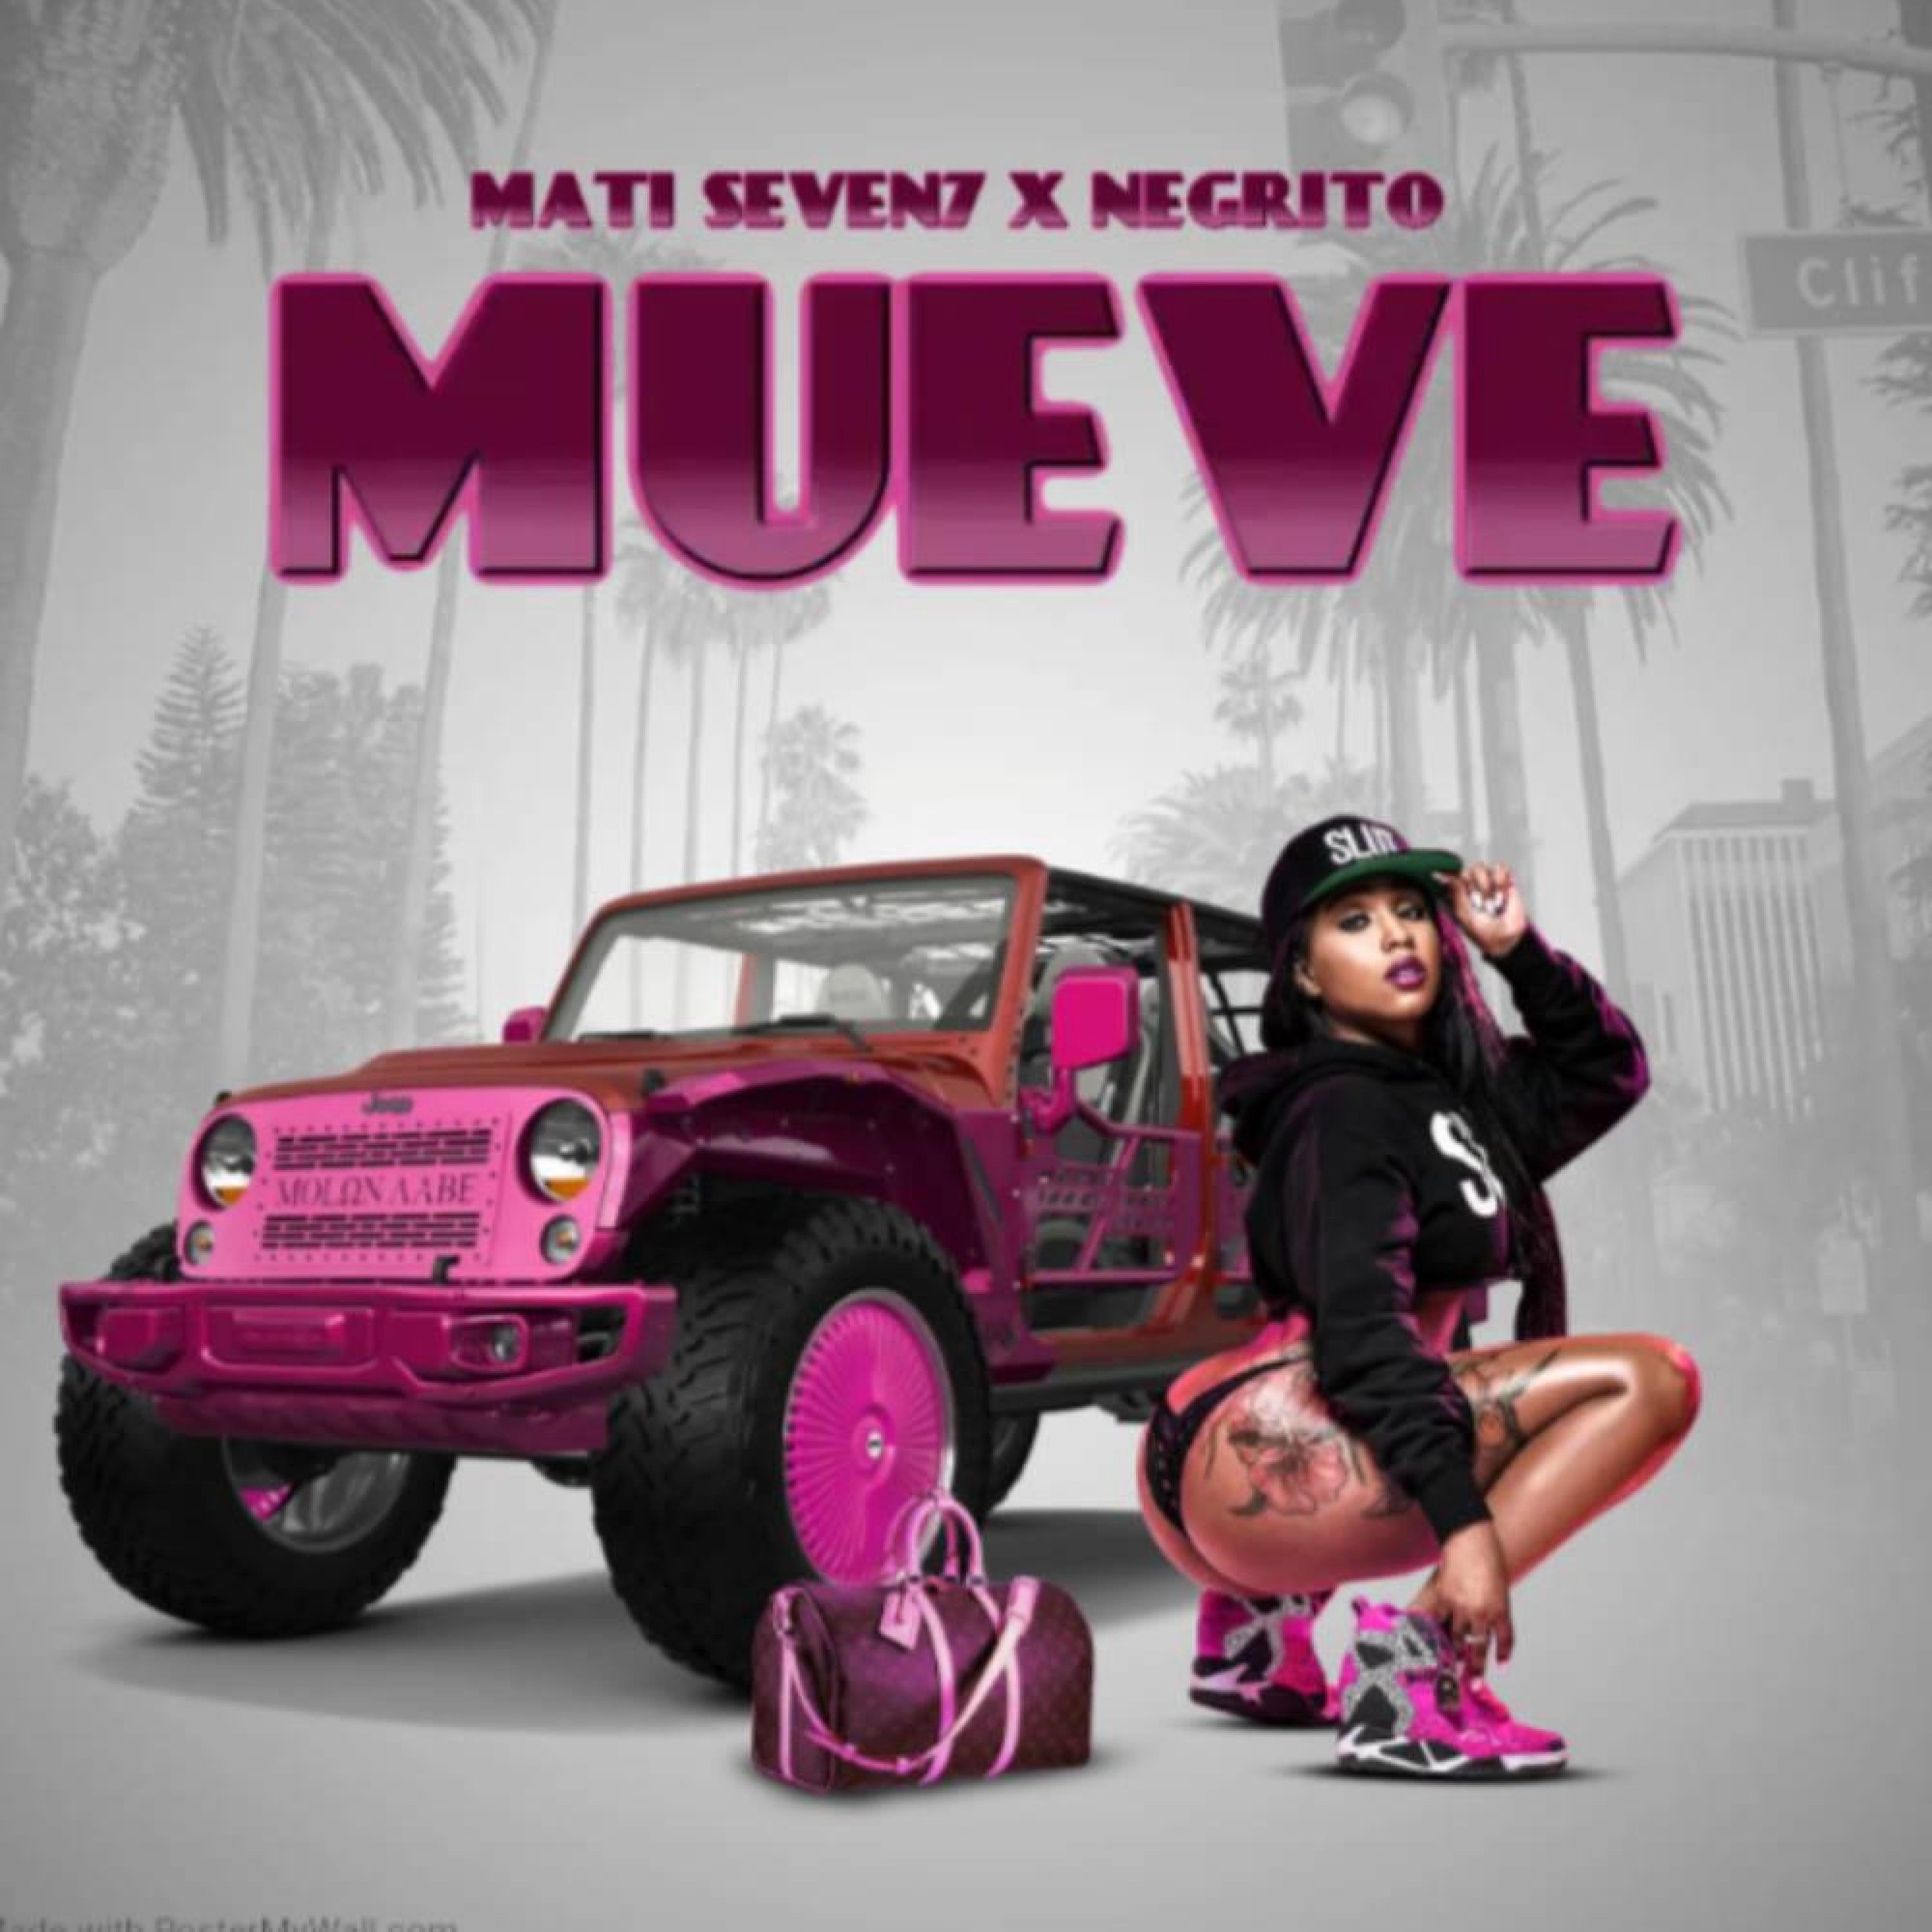 El Negrito - mueve (feat. matiseven)